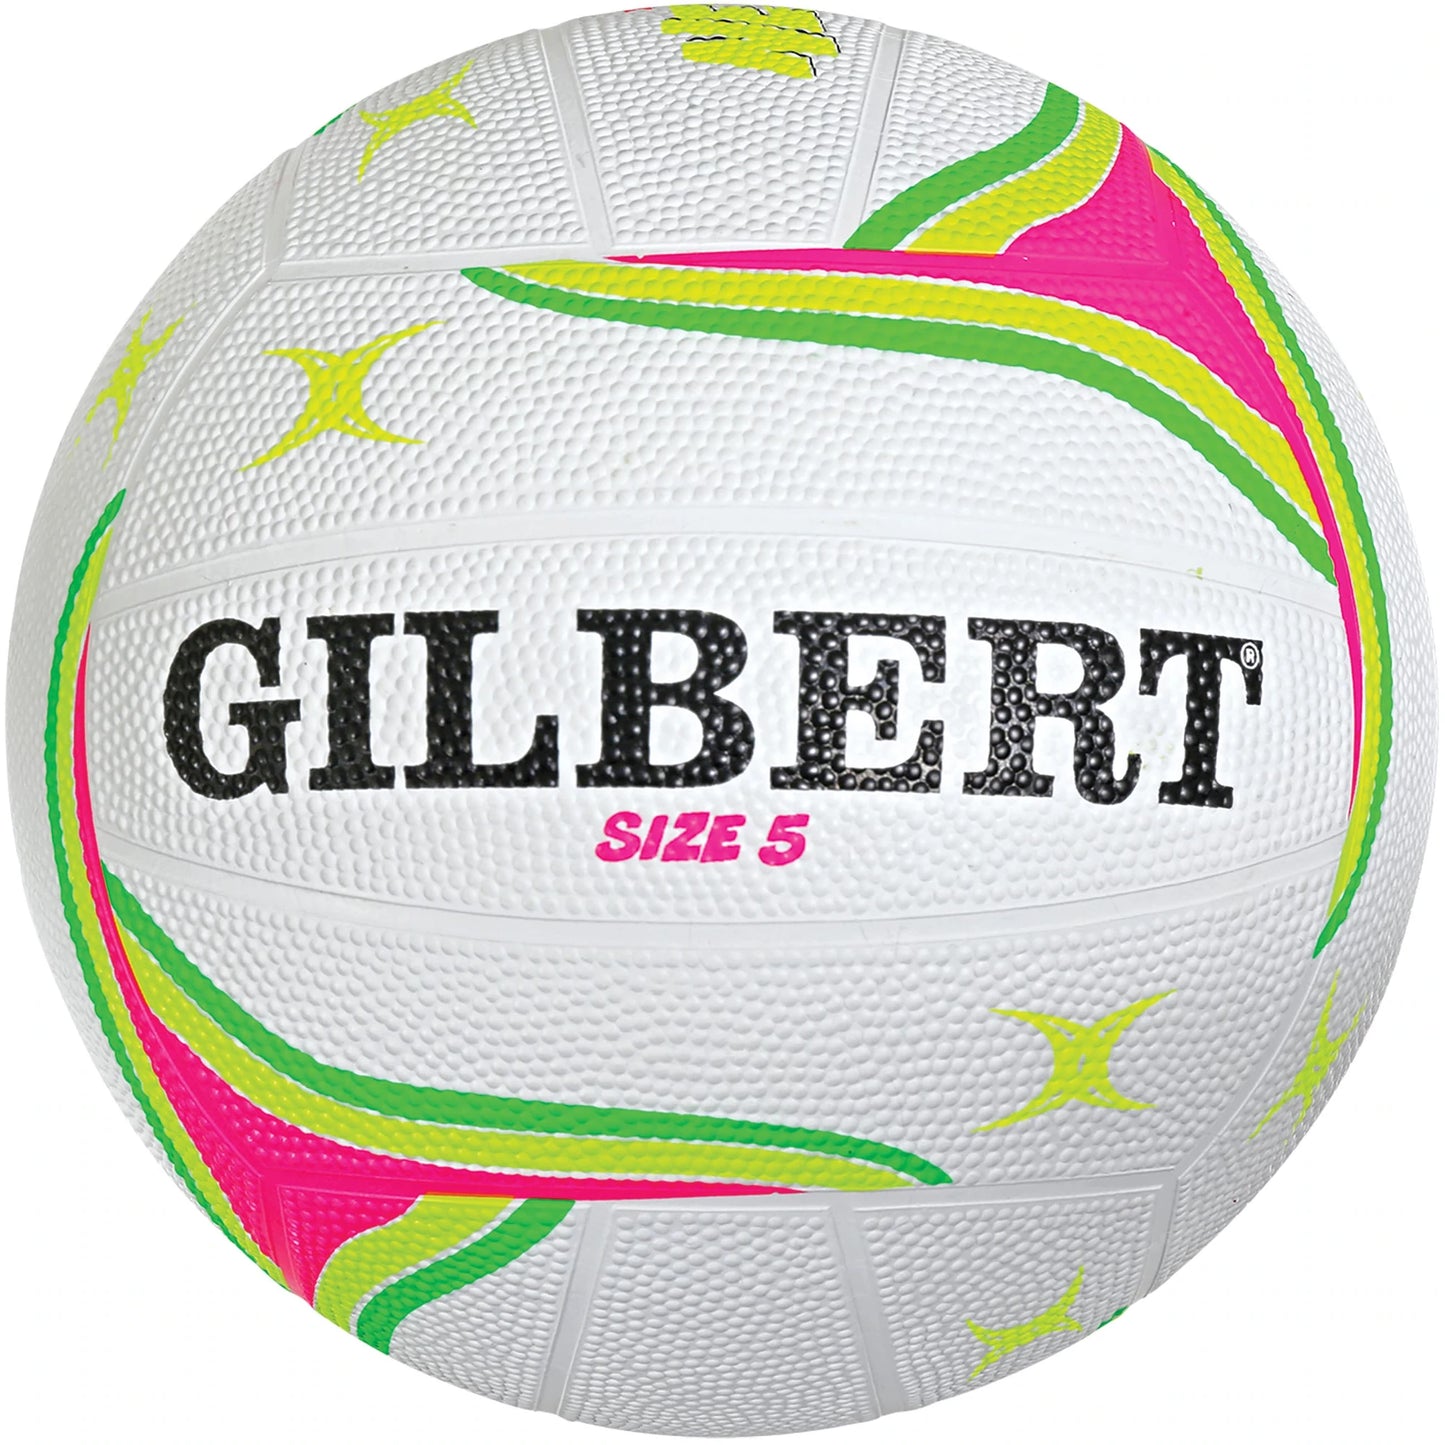 GILBERT APT TRAINING NETBALL